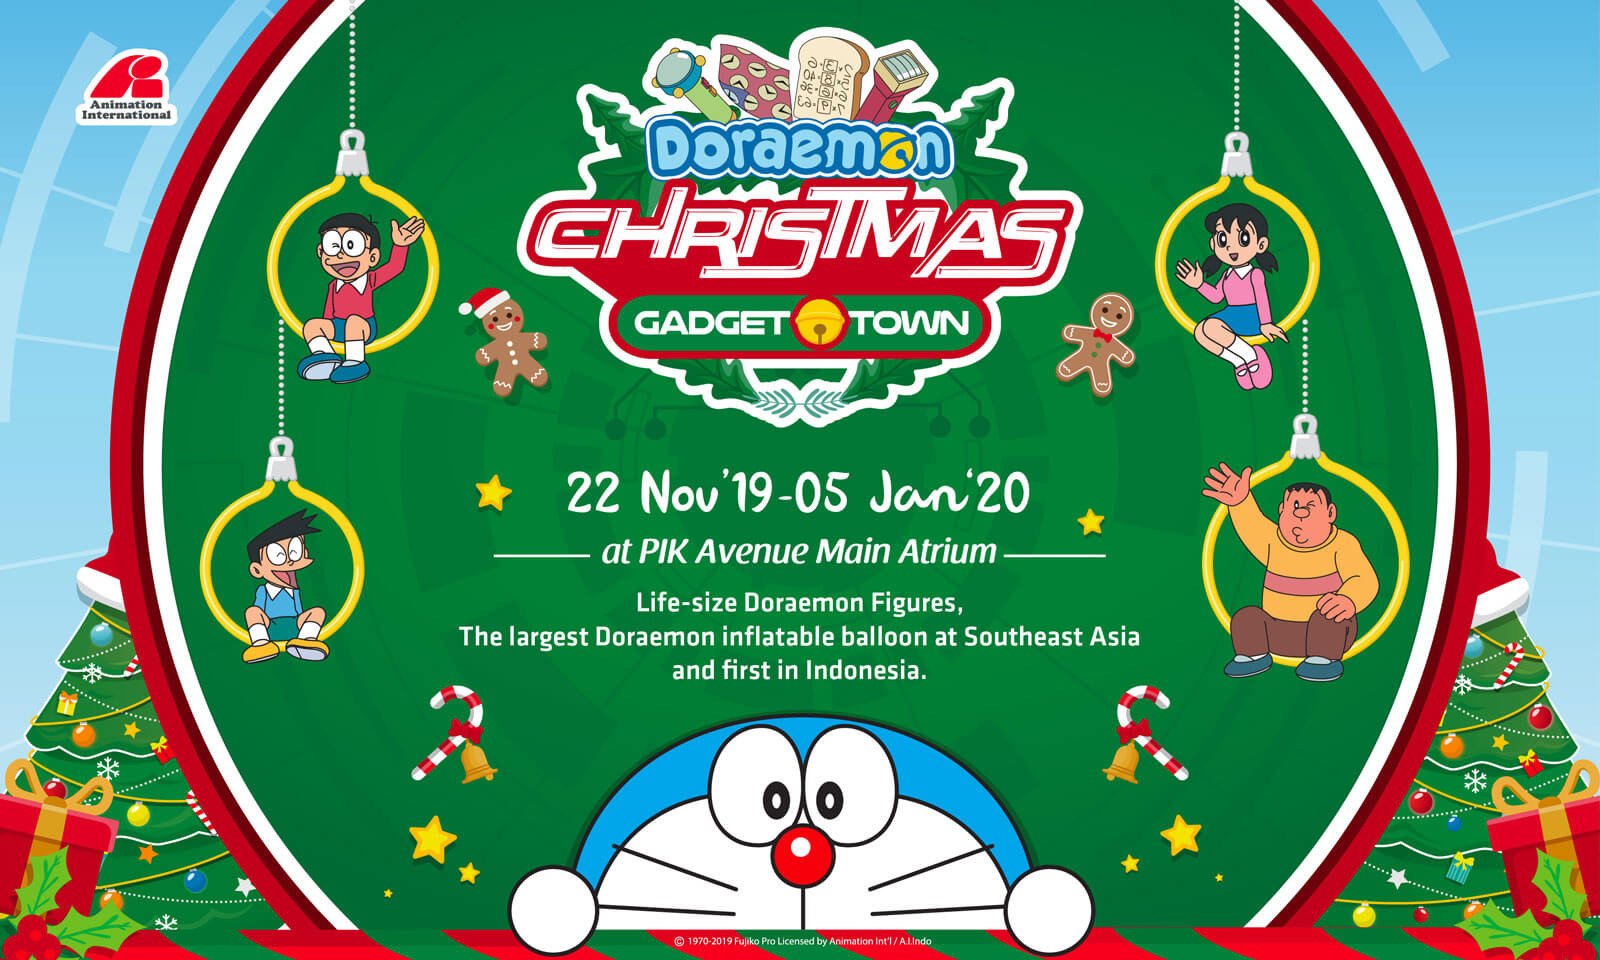 Doraemon Christmas Gadget Town